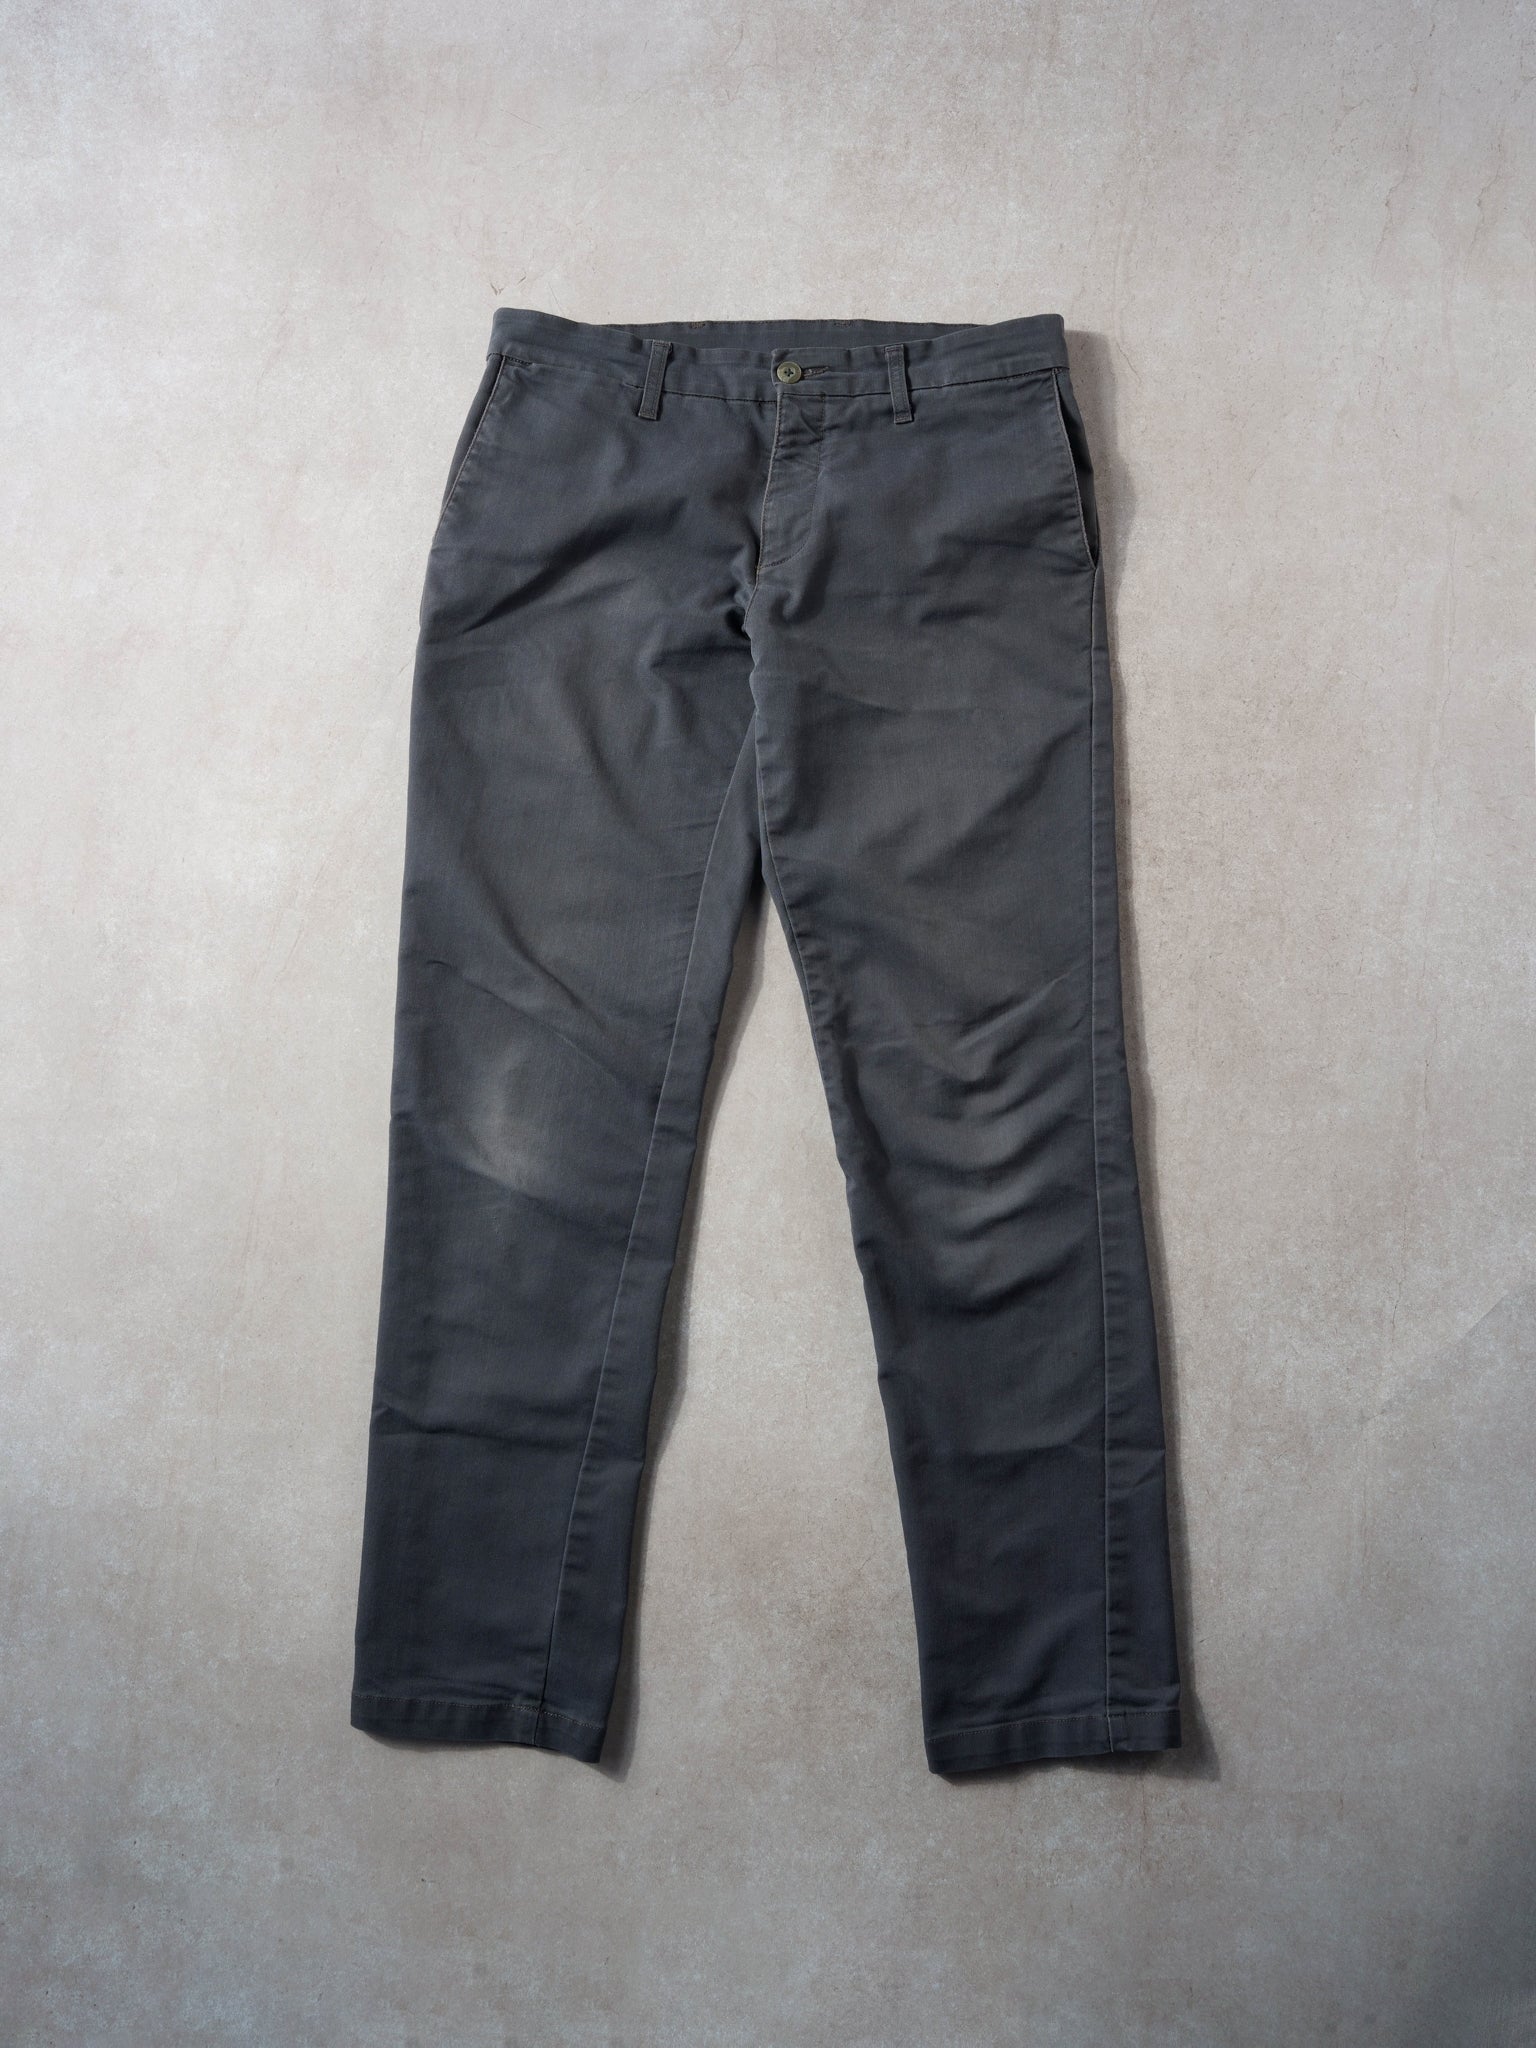 Vintage 90s Grey Carhartt Cid Straight Pants (36x31)